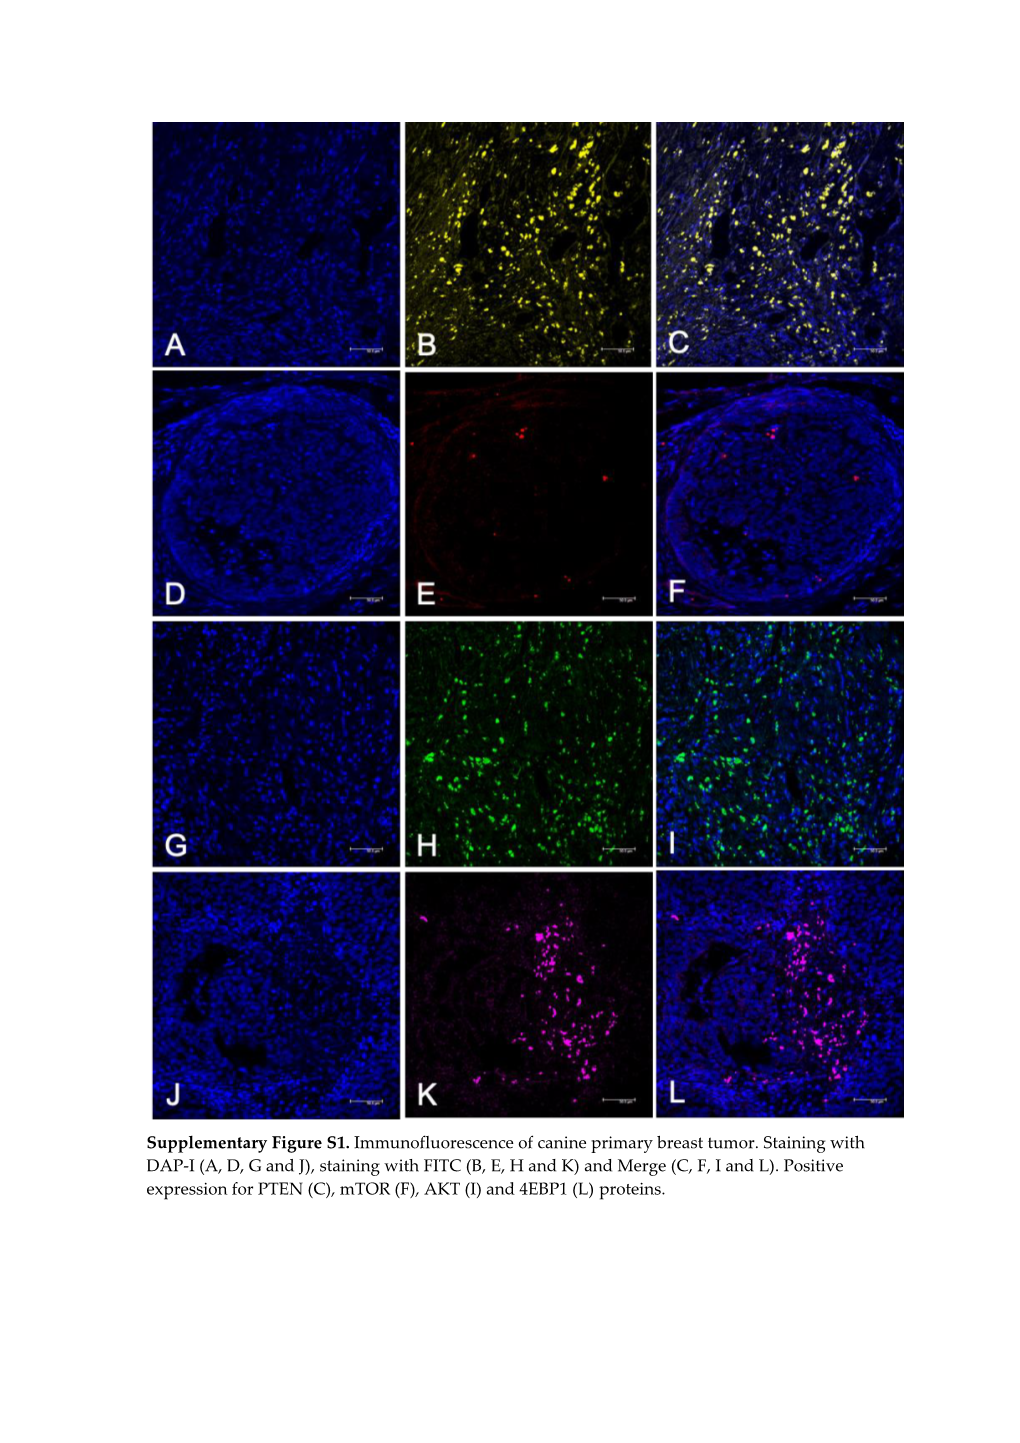 Supplementary Figure S1. Immunofluorescence of Canine Primary Breast Tumor